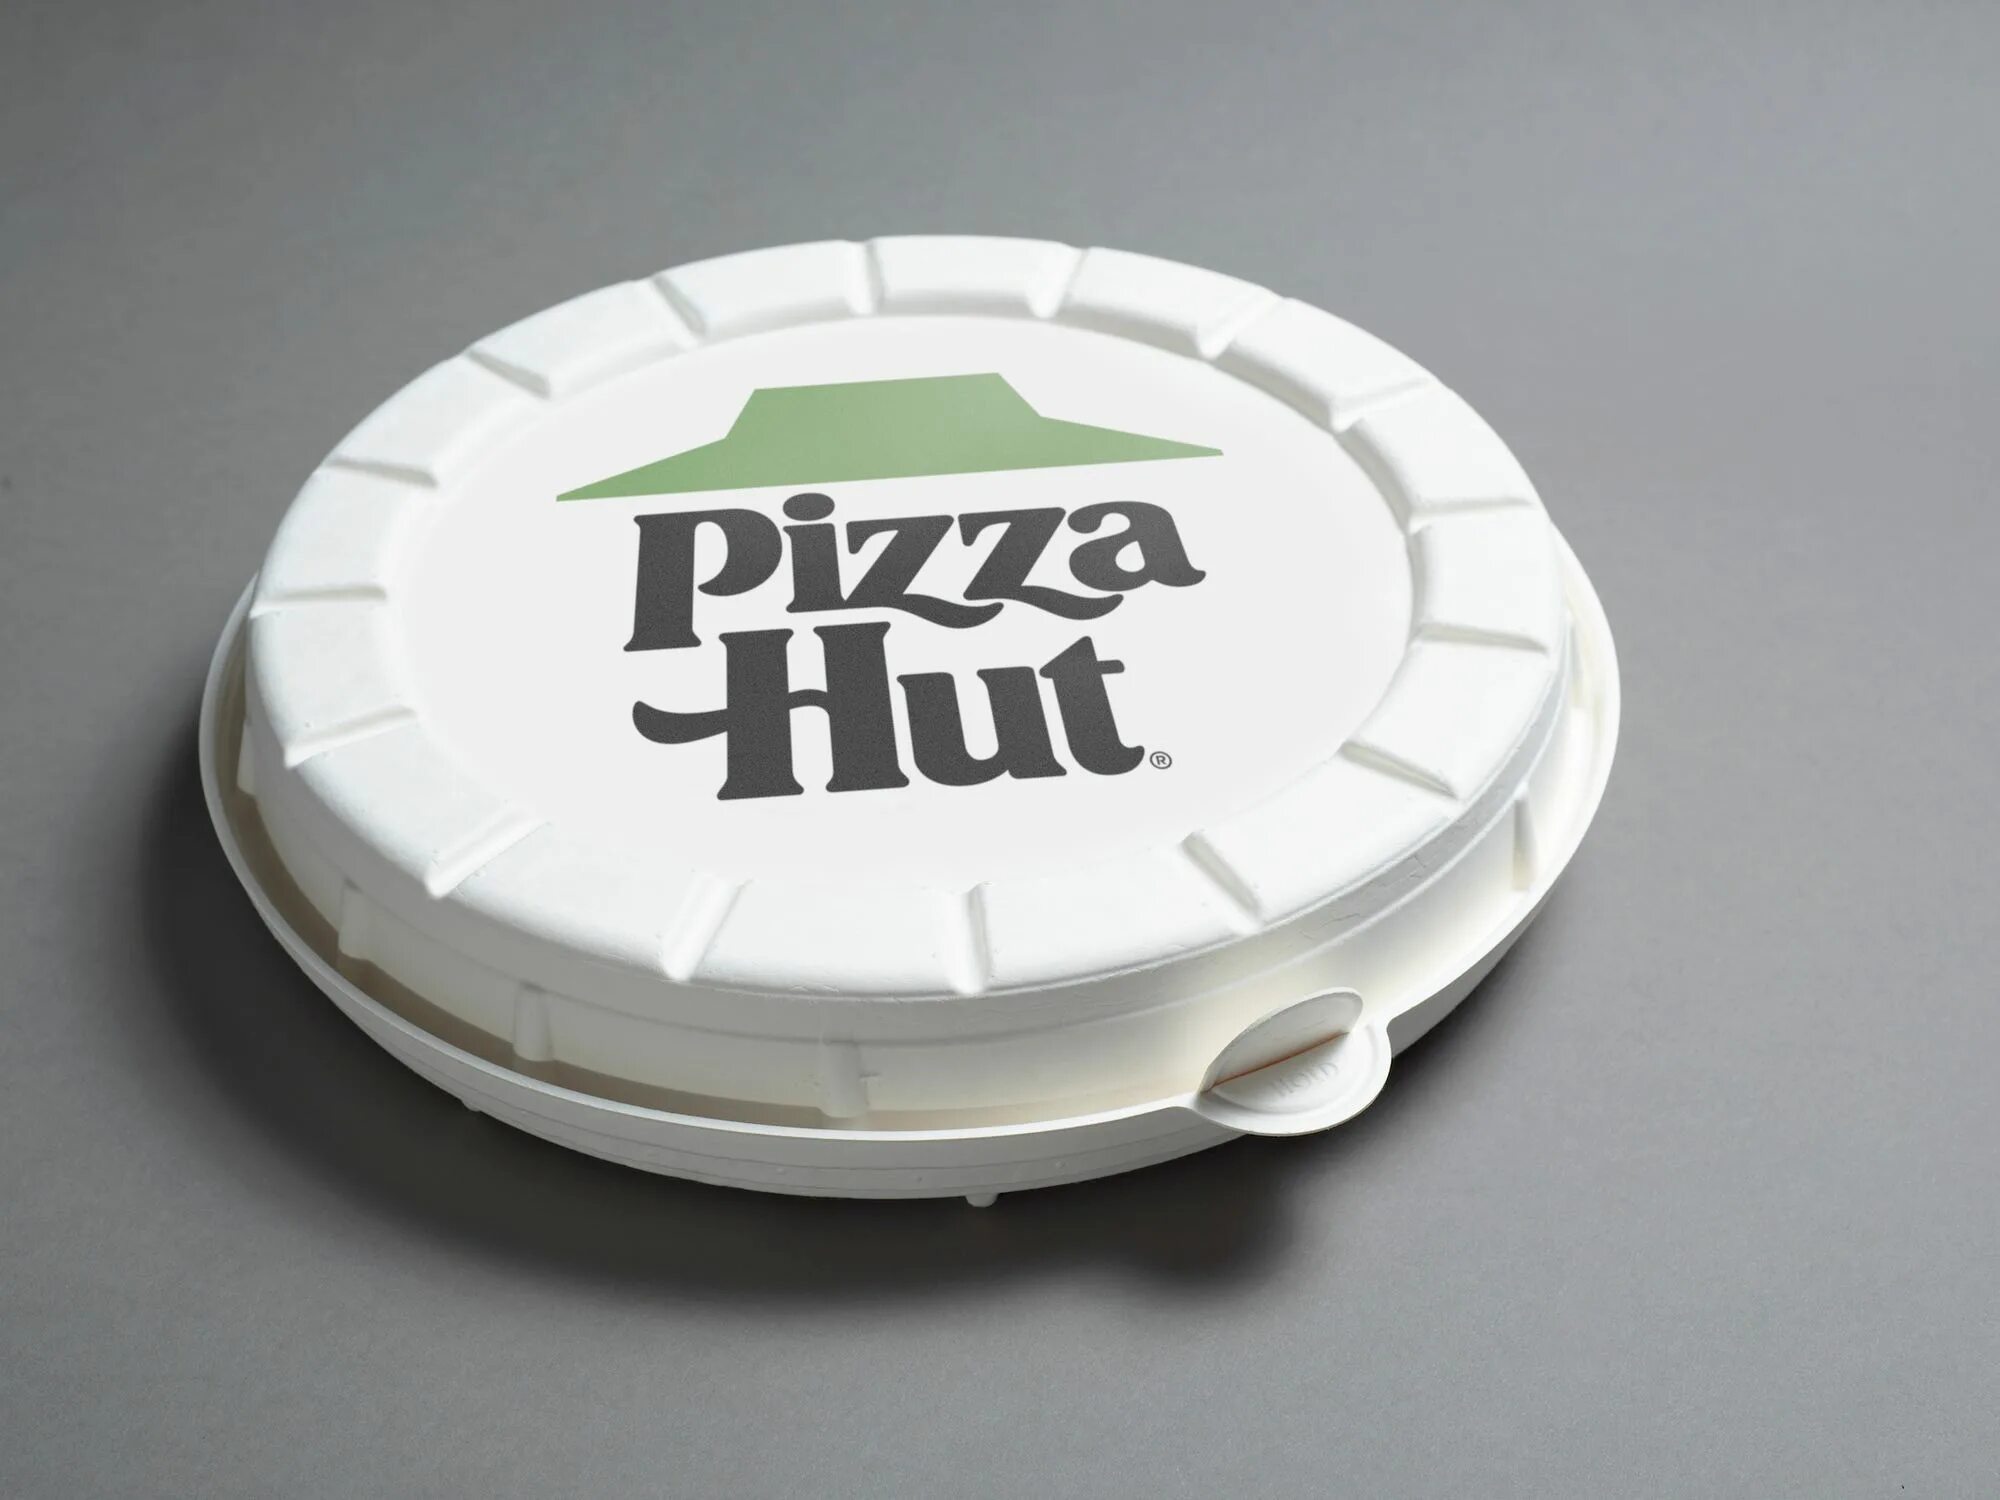 Keep in box. Круглая коробка для пиццы. Круглая упаковка для пиццы. Круглая пицца коробка круглая. Пицца в круглой коробке.